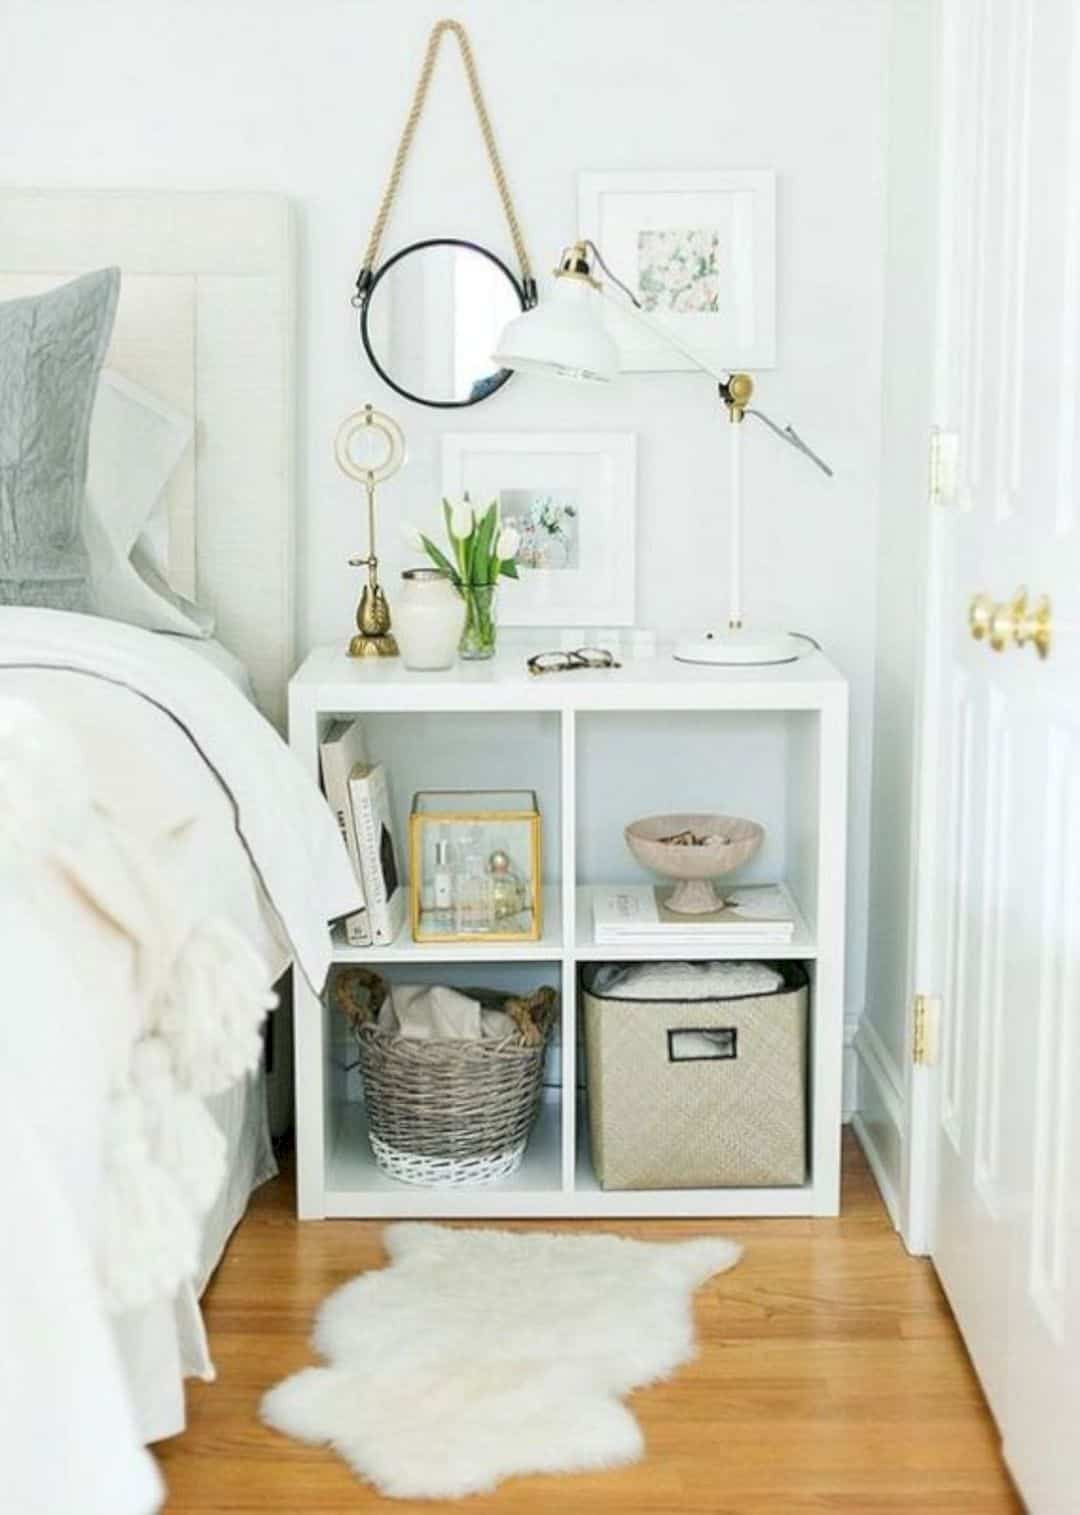 DIY Bedroom Organizers
 17 Stunning DIY Bedroom Storage Ideas